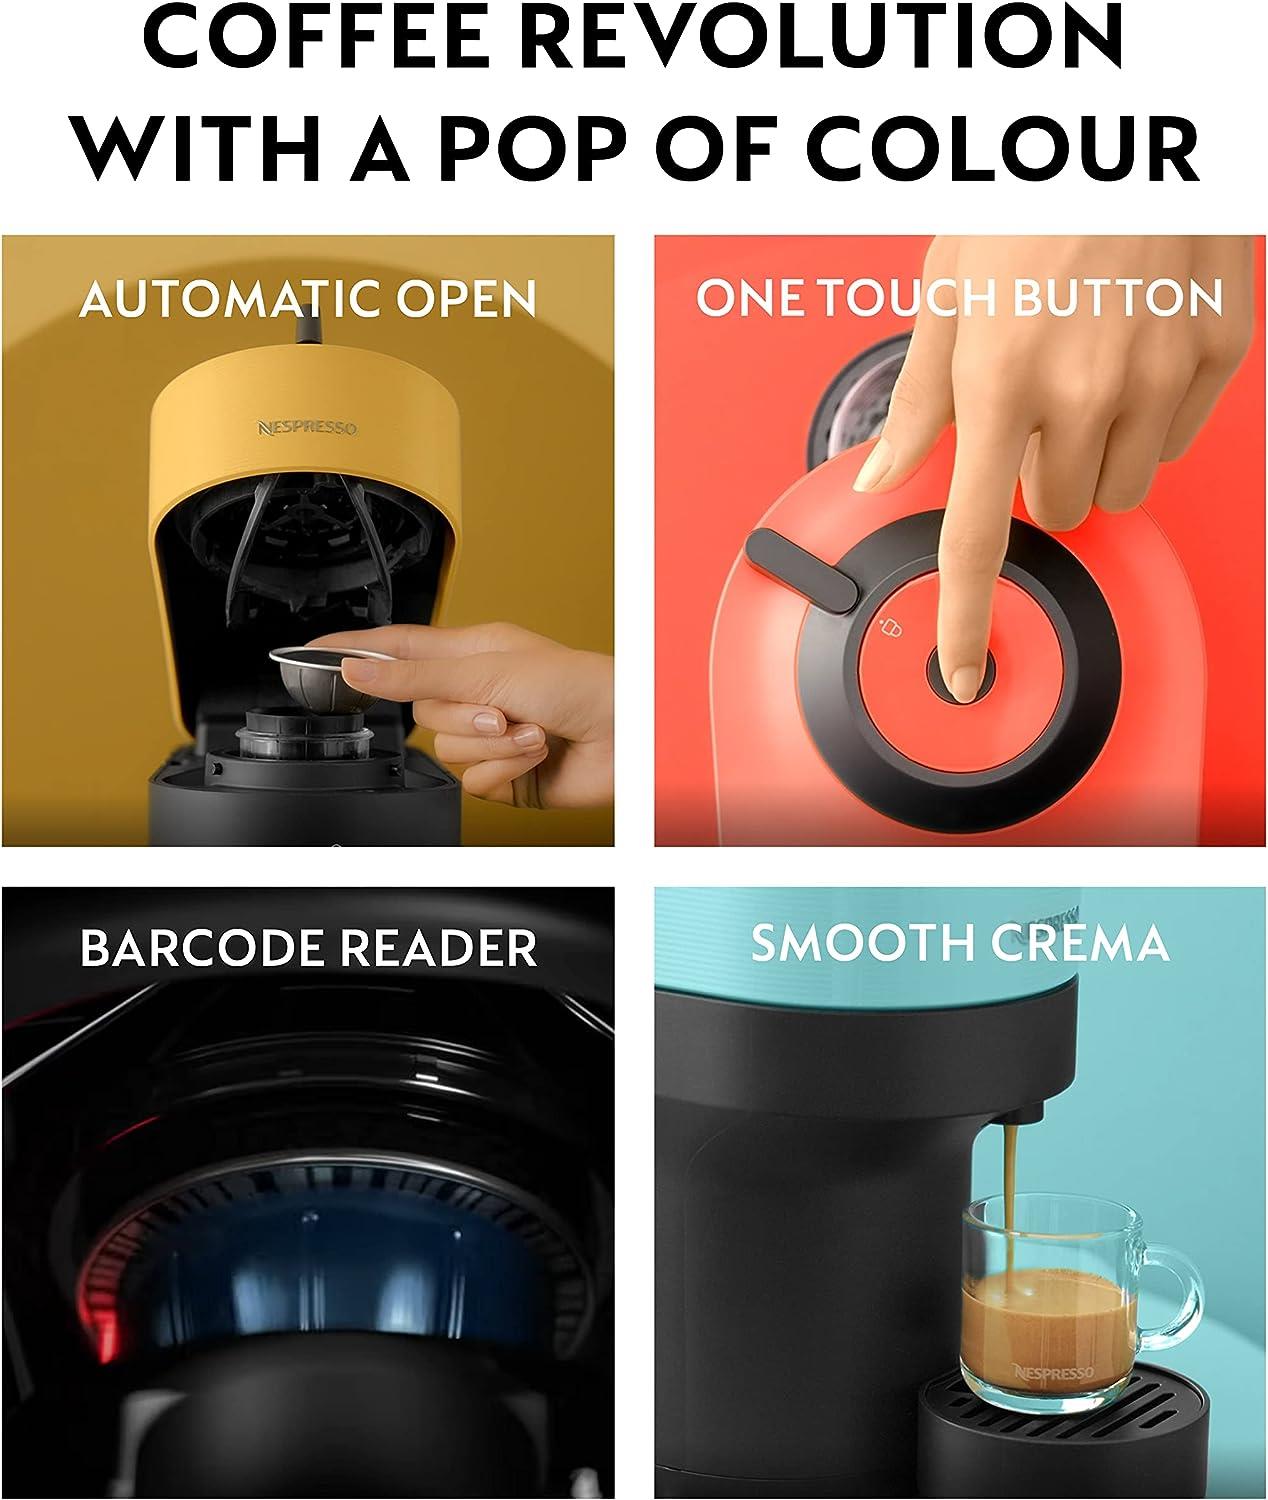 Nespresso Spicy Red Vertuo Pop Coffee Pod Machine by Krups